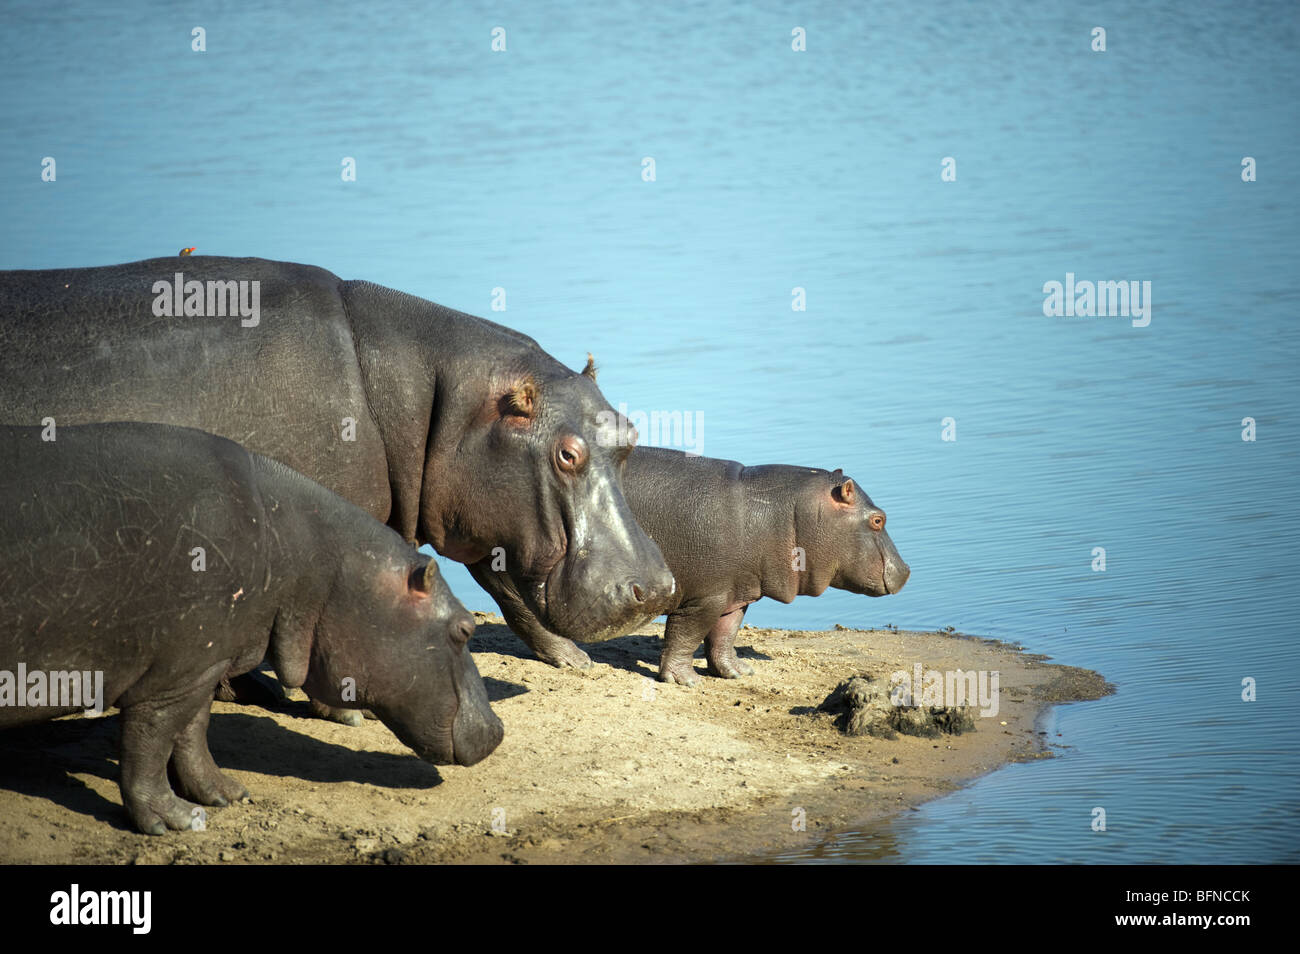 Hippo Family at Lake Stock Photo